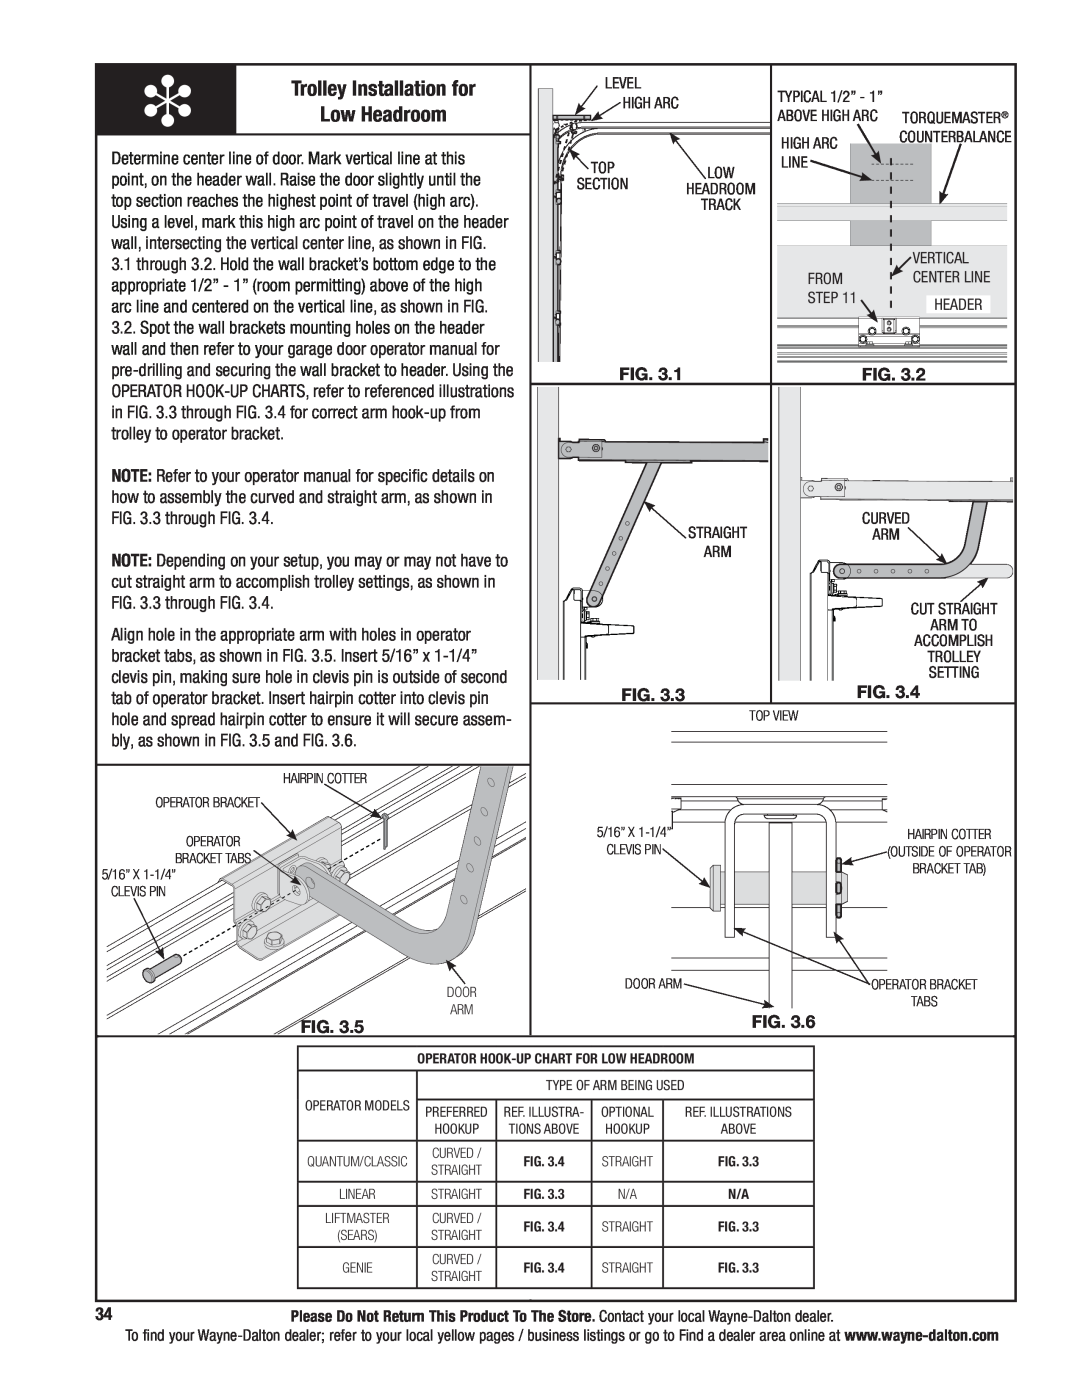 Wayne-Dalton 5140, 5120 installation instructions Trolley Installation for Low Headroom 